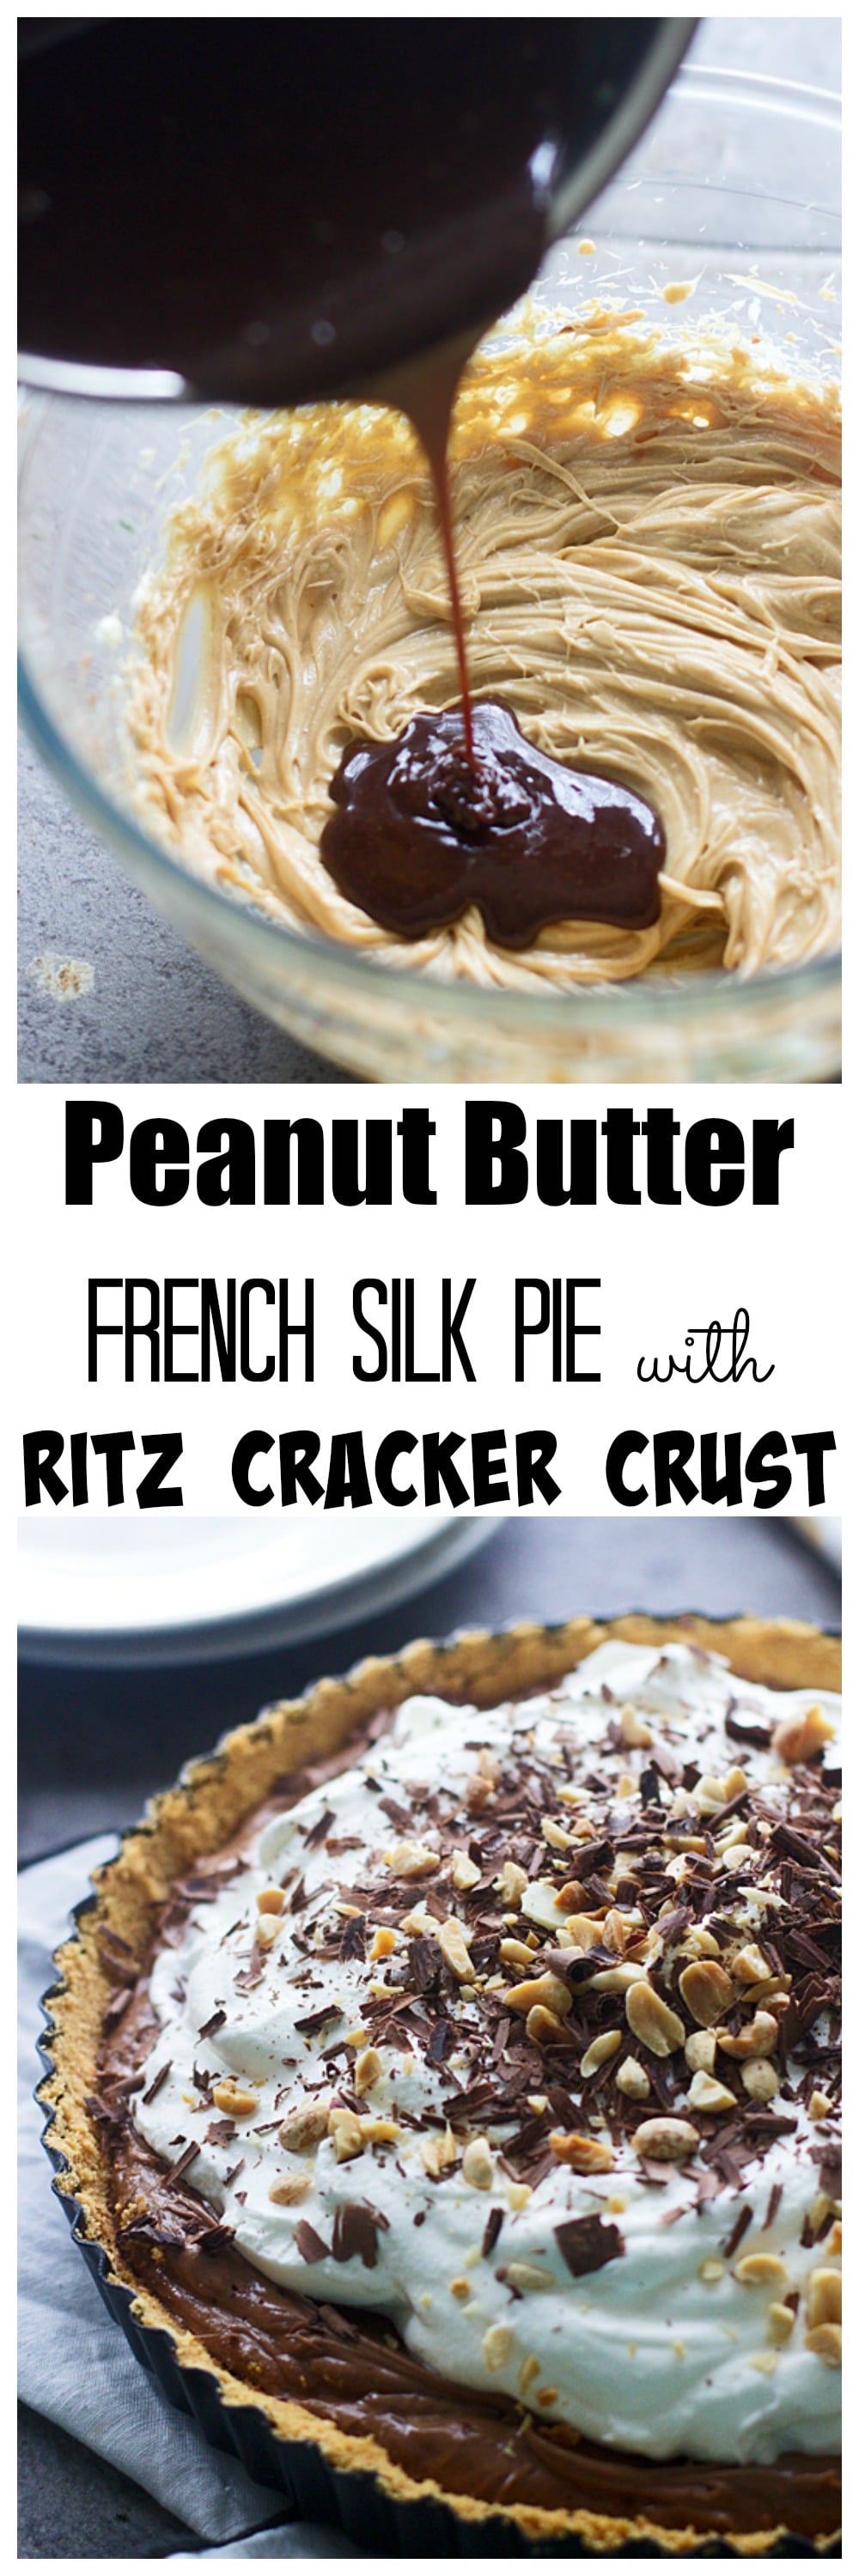 Peanut Butter French Silk Pie with Ritz Cracker Crust